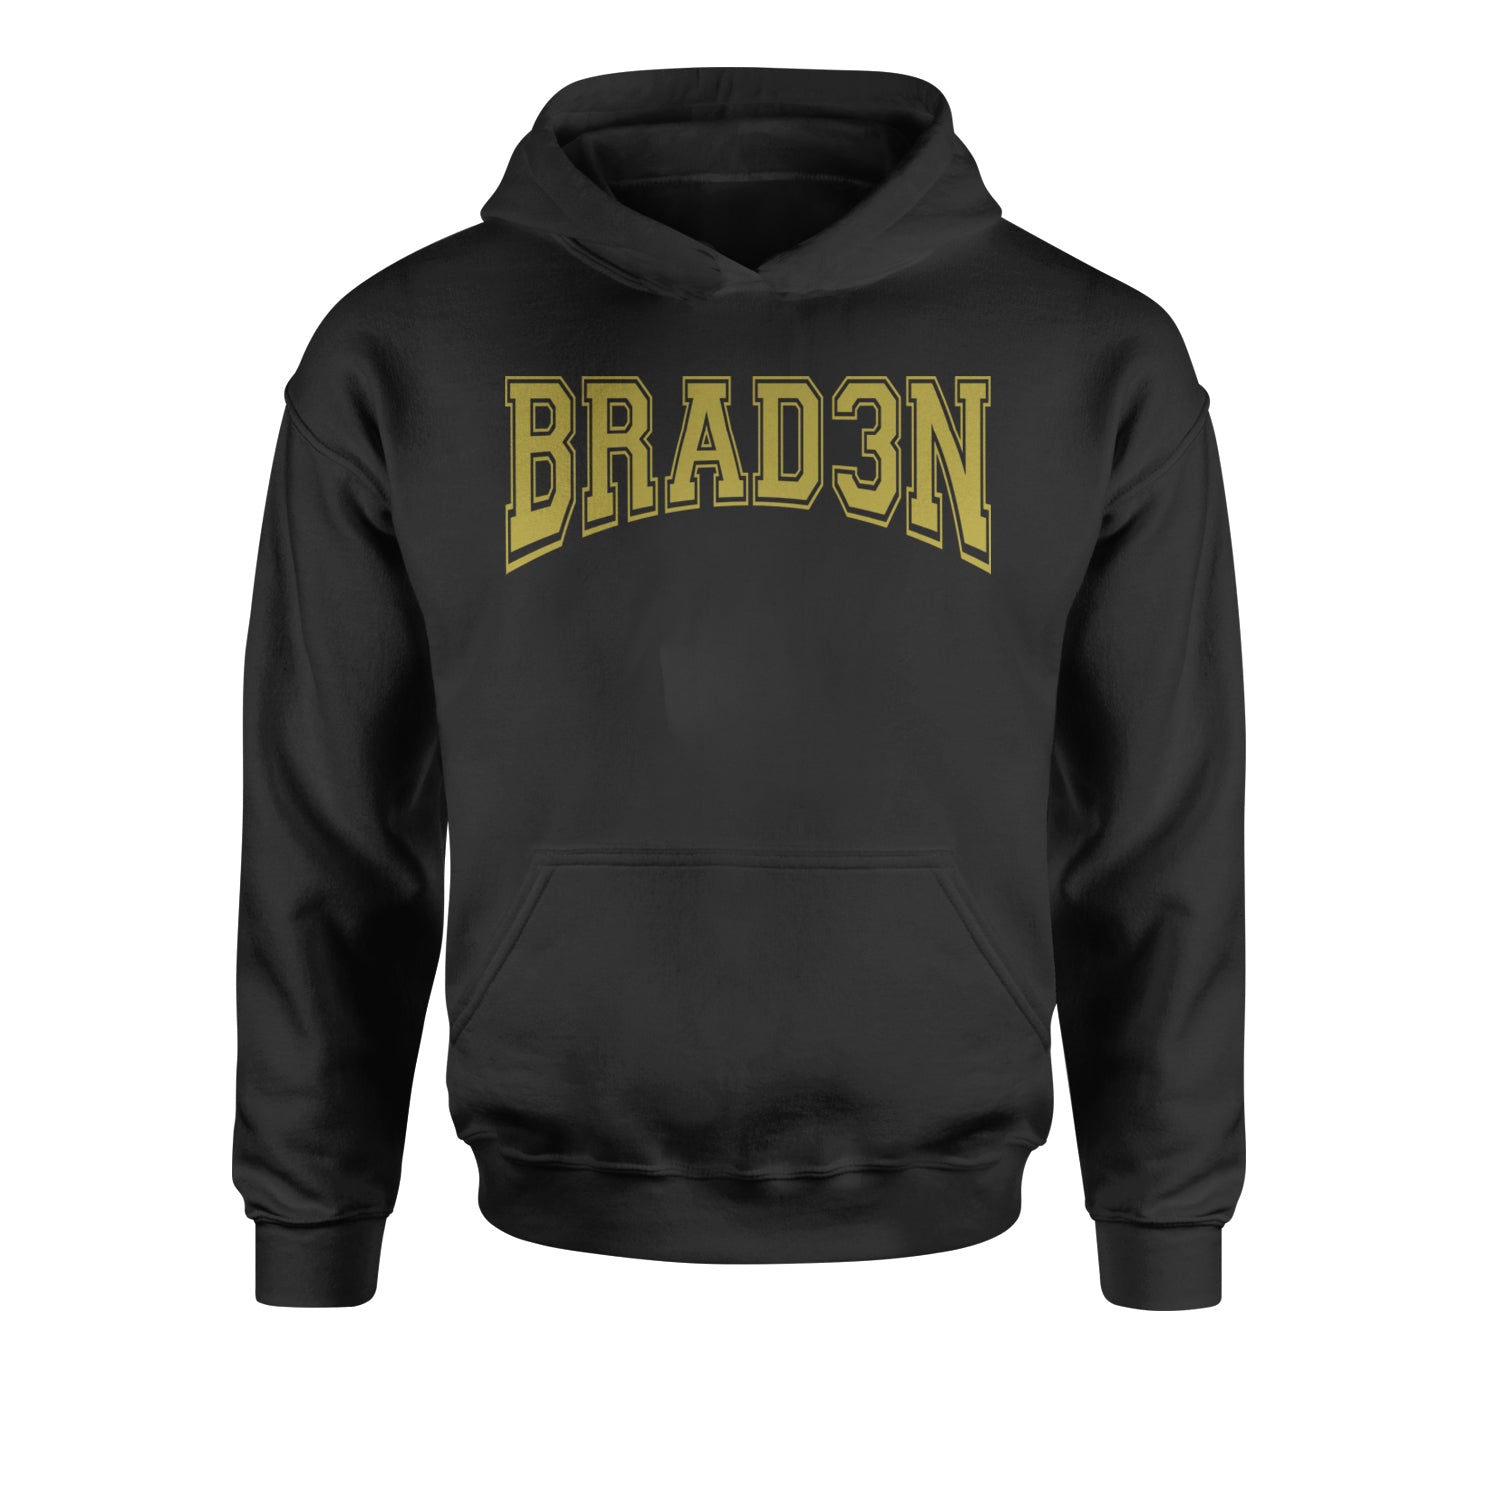 Braden Brad3n Basketball Youth-Sized Hoodie